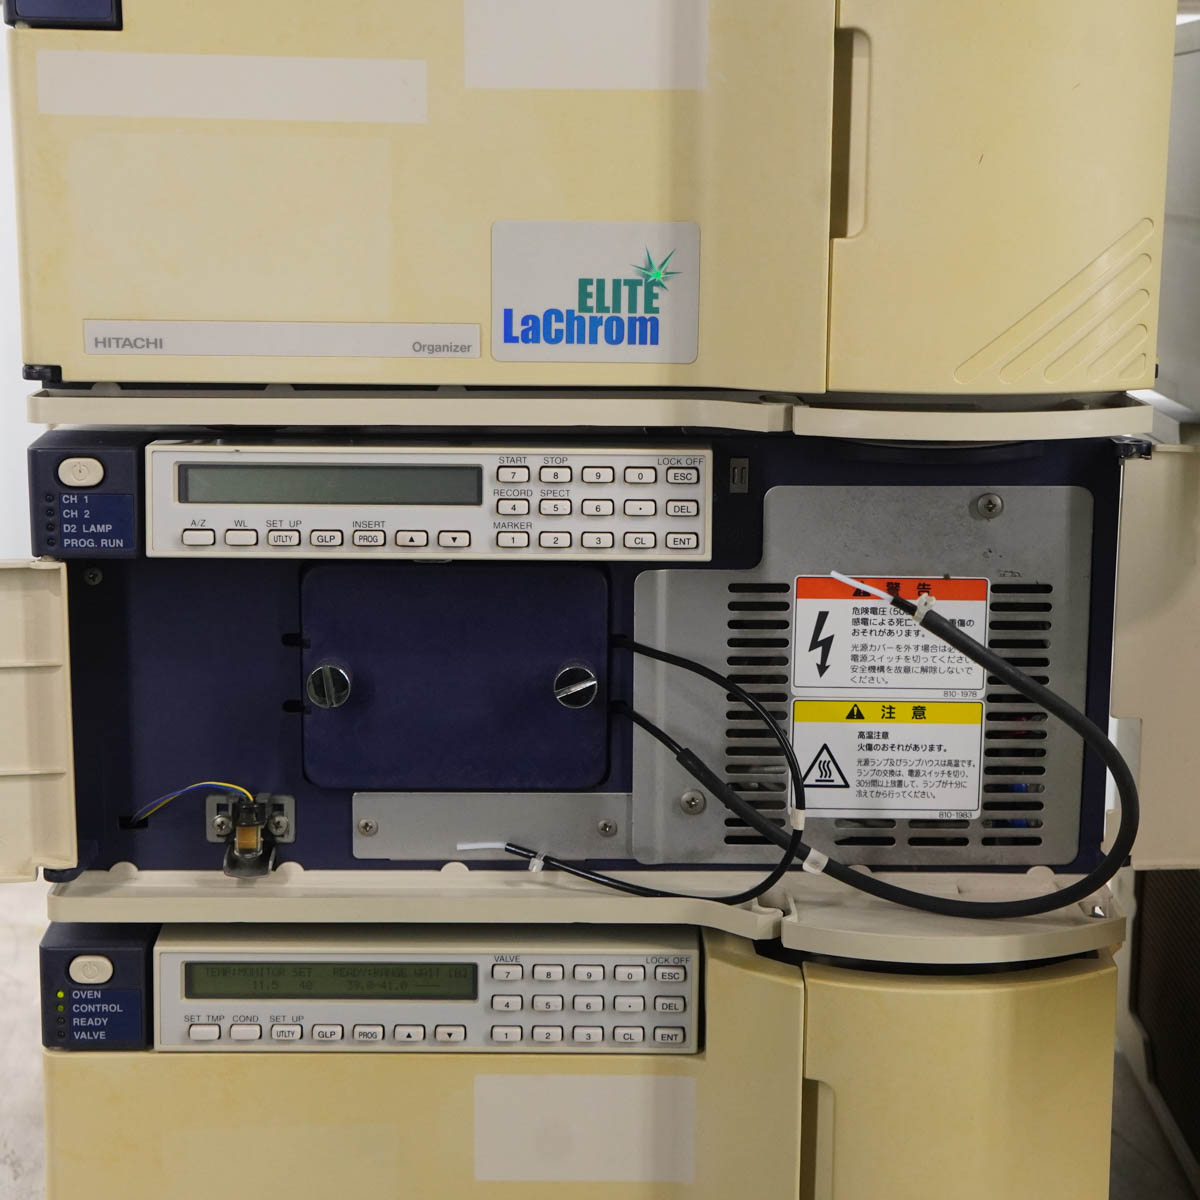 [DW]USED 8日保証 セット HITACHI L-2400 L-2130 L-2200 L-2300 Organizer HPLC ELITE LaChrom UV Detector Pump Autosampl...[04643-0011] - 12